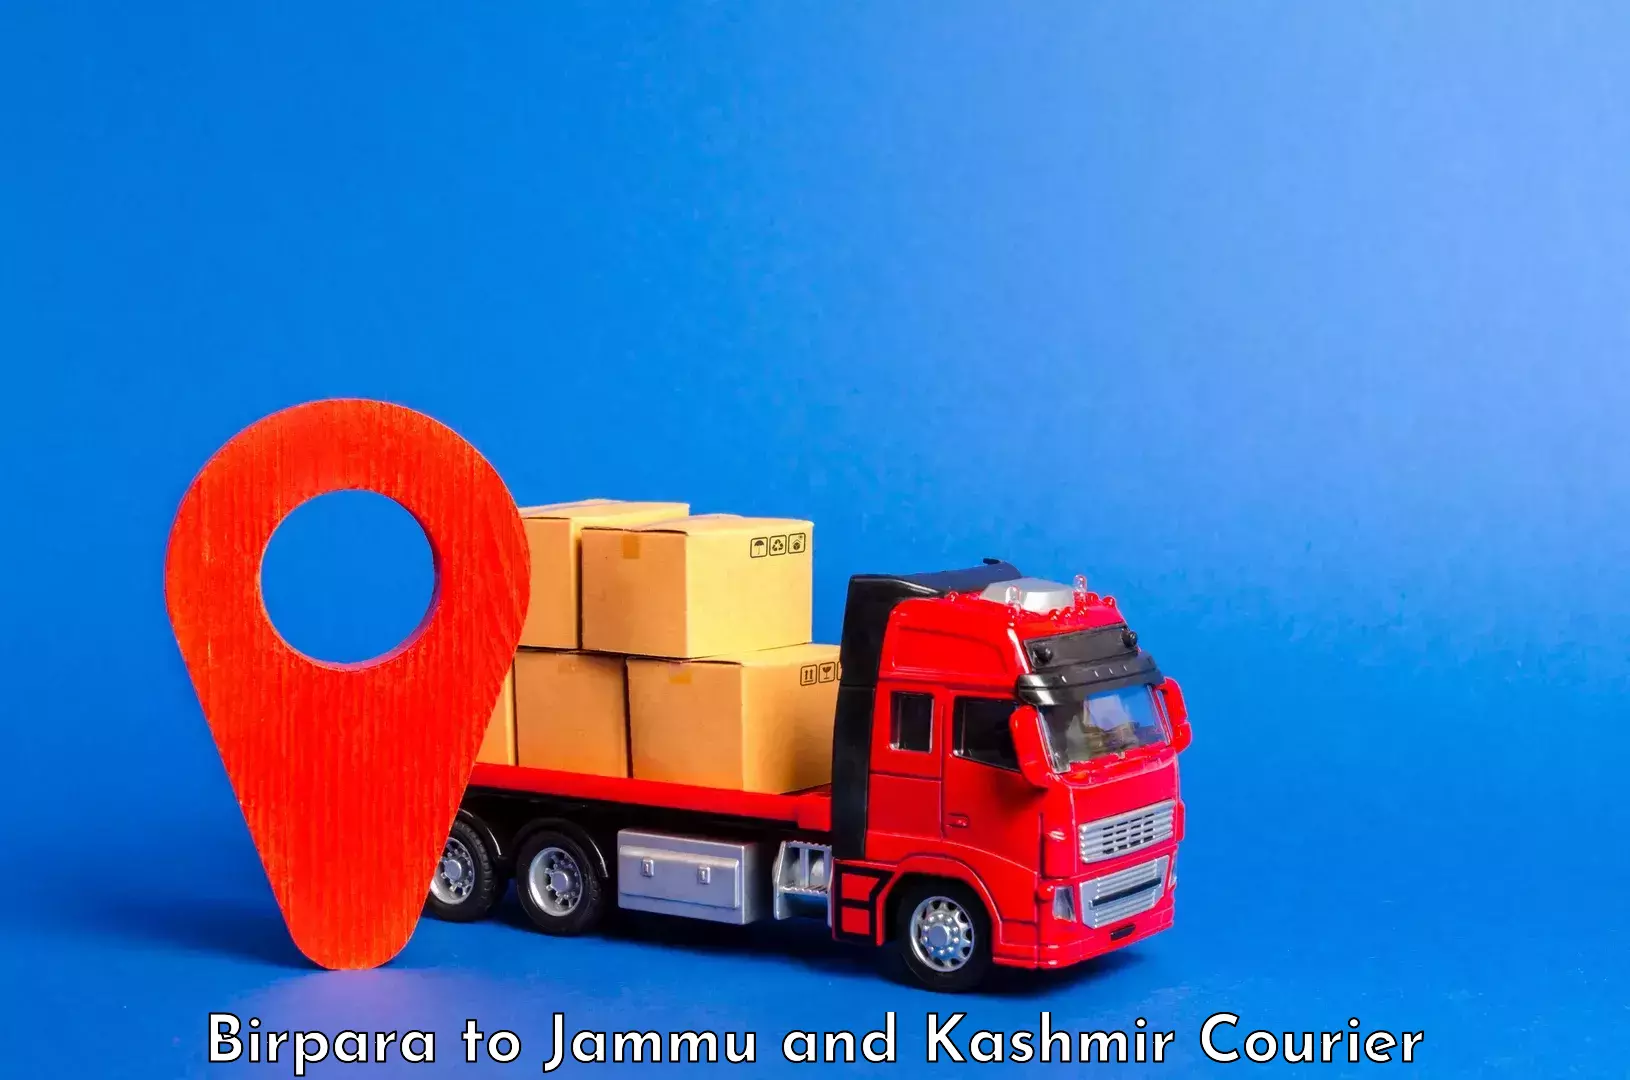 Baggage transport network Birpara to Jammu